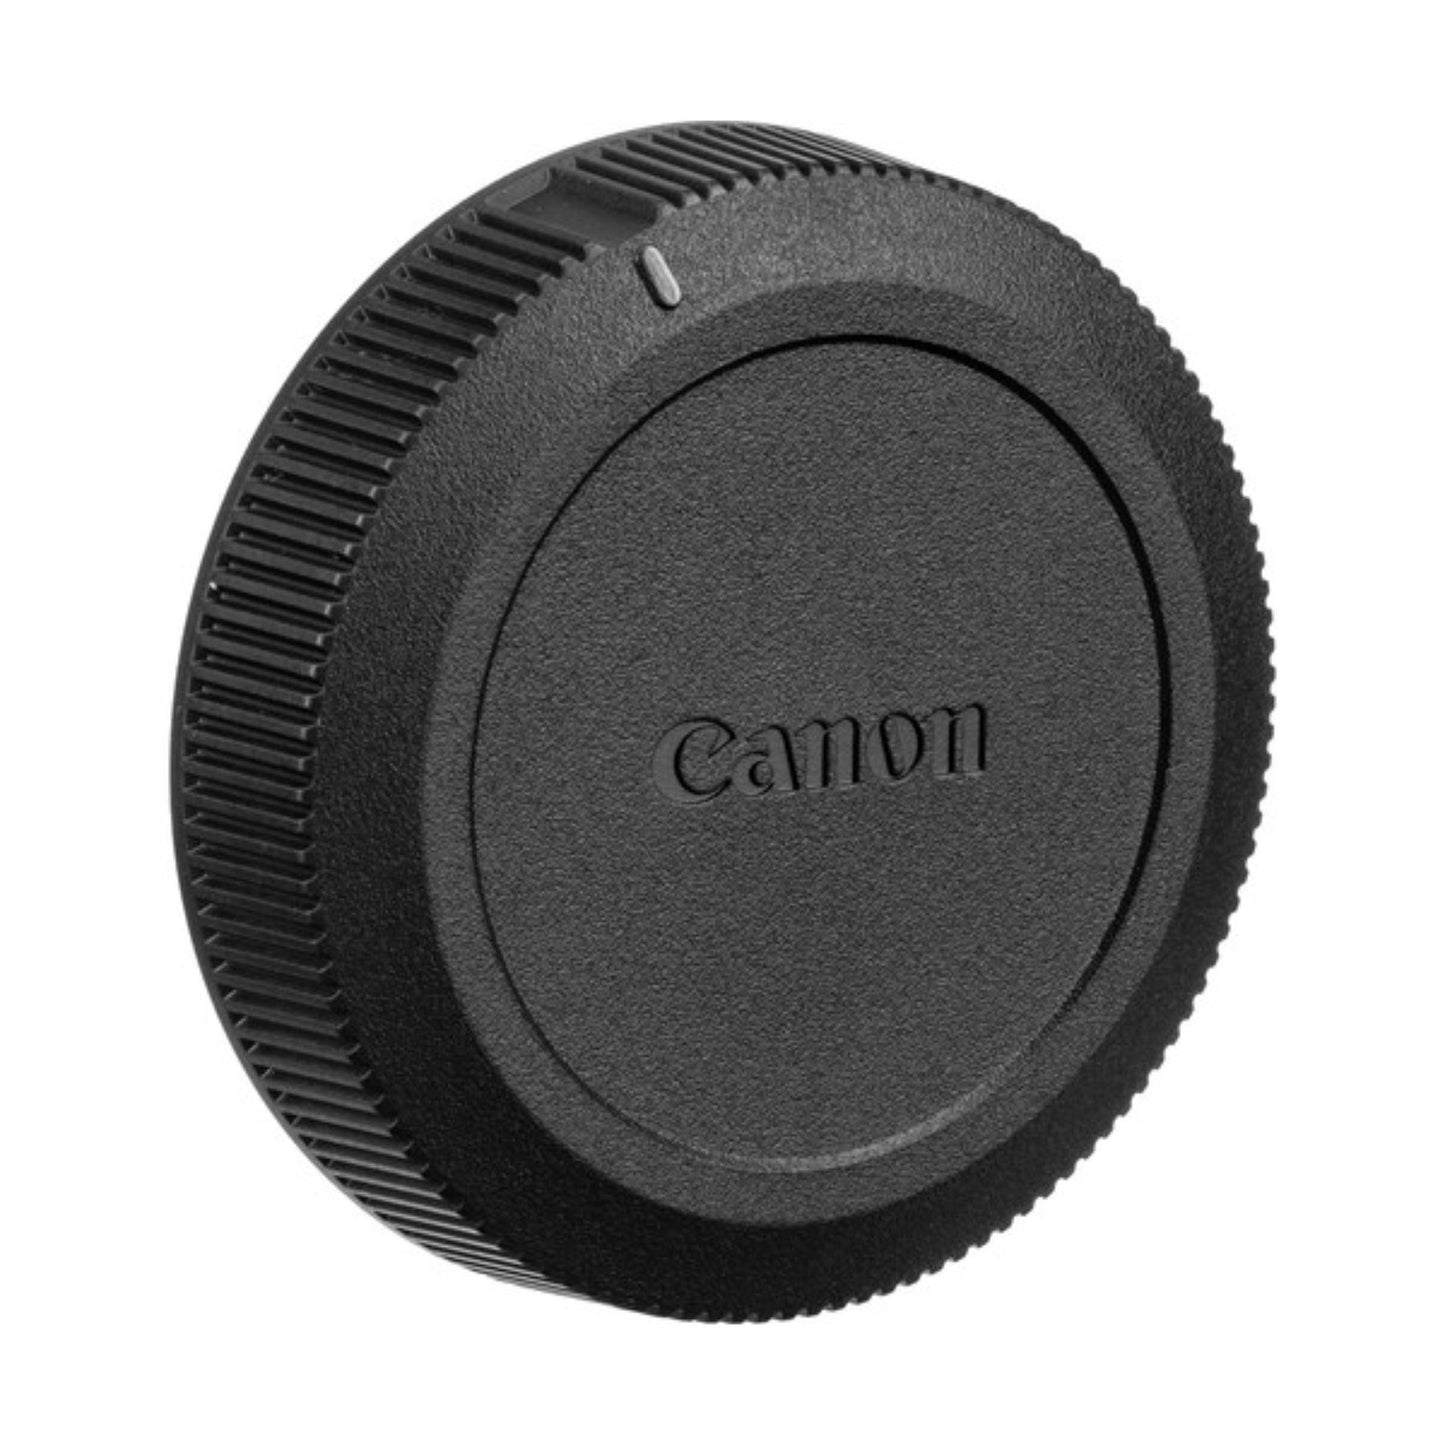 Buy Canon Lens Dust Cap RF at Topic Store